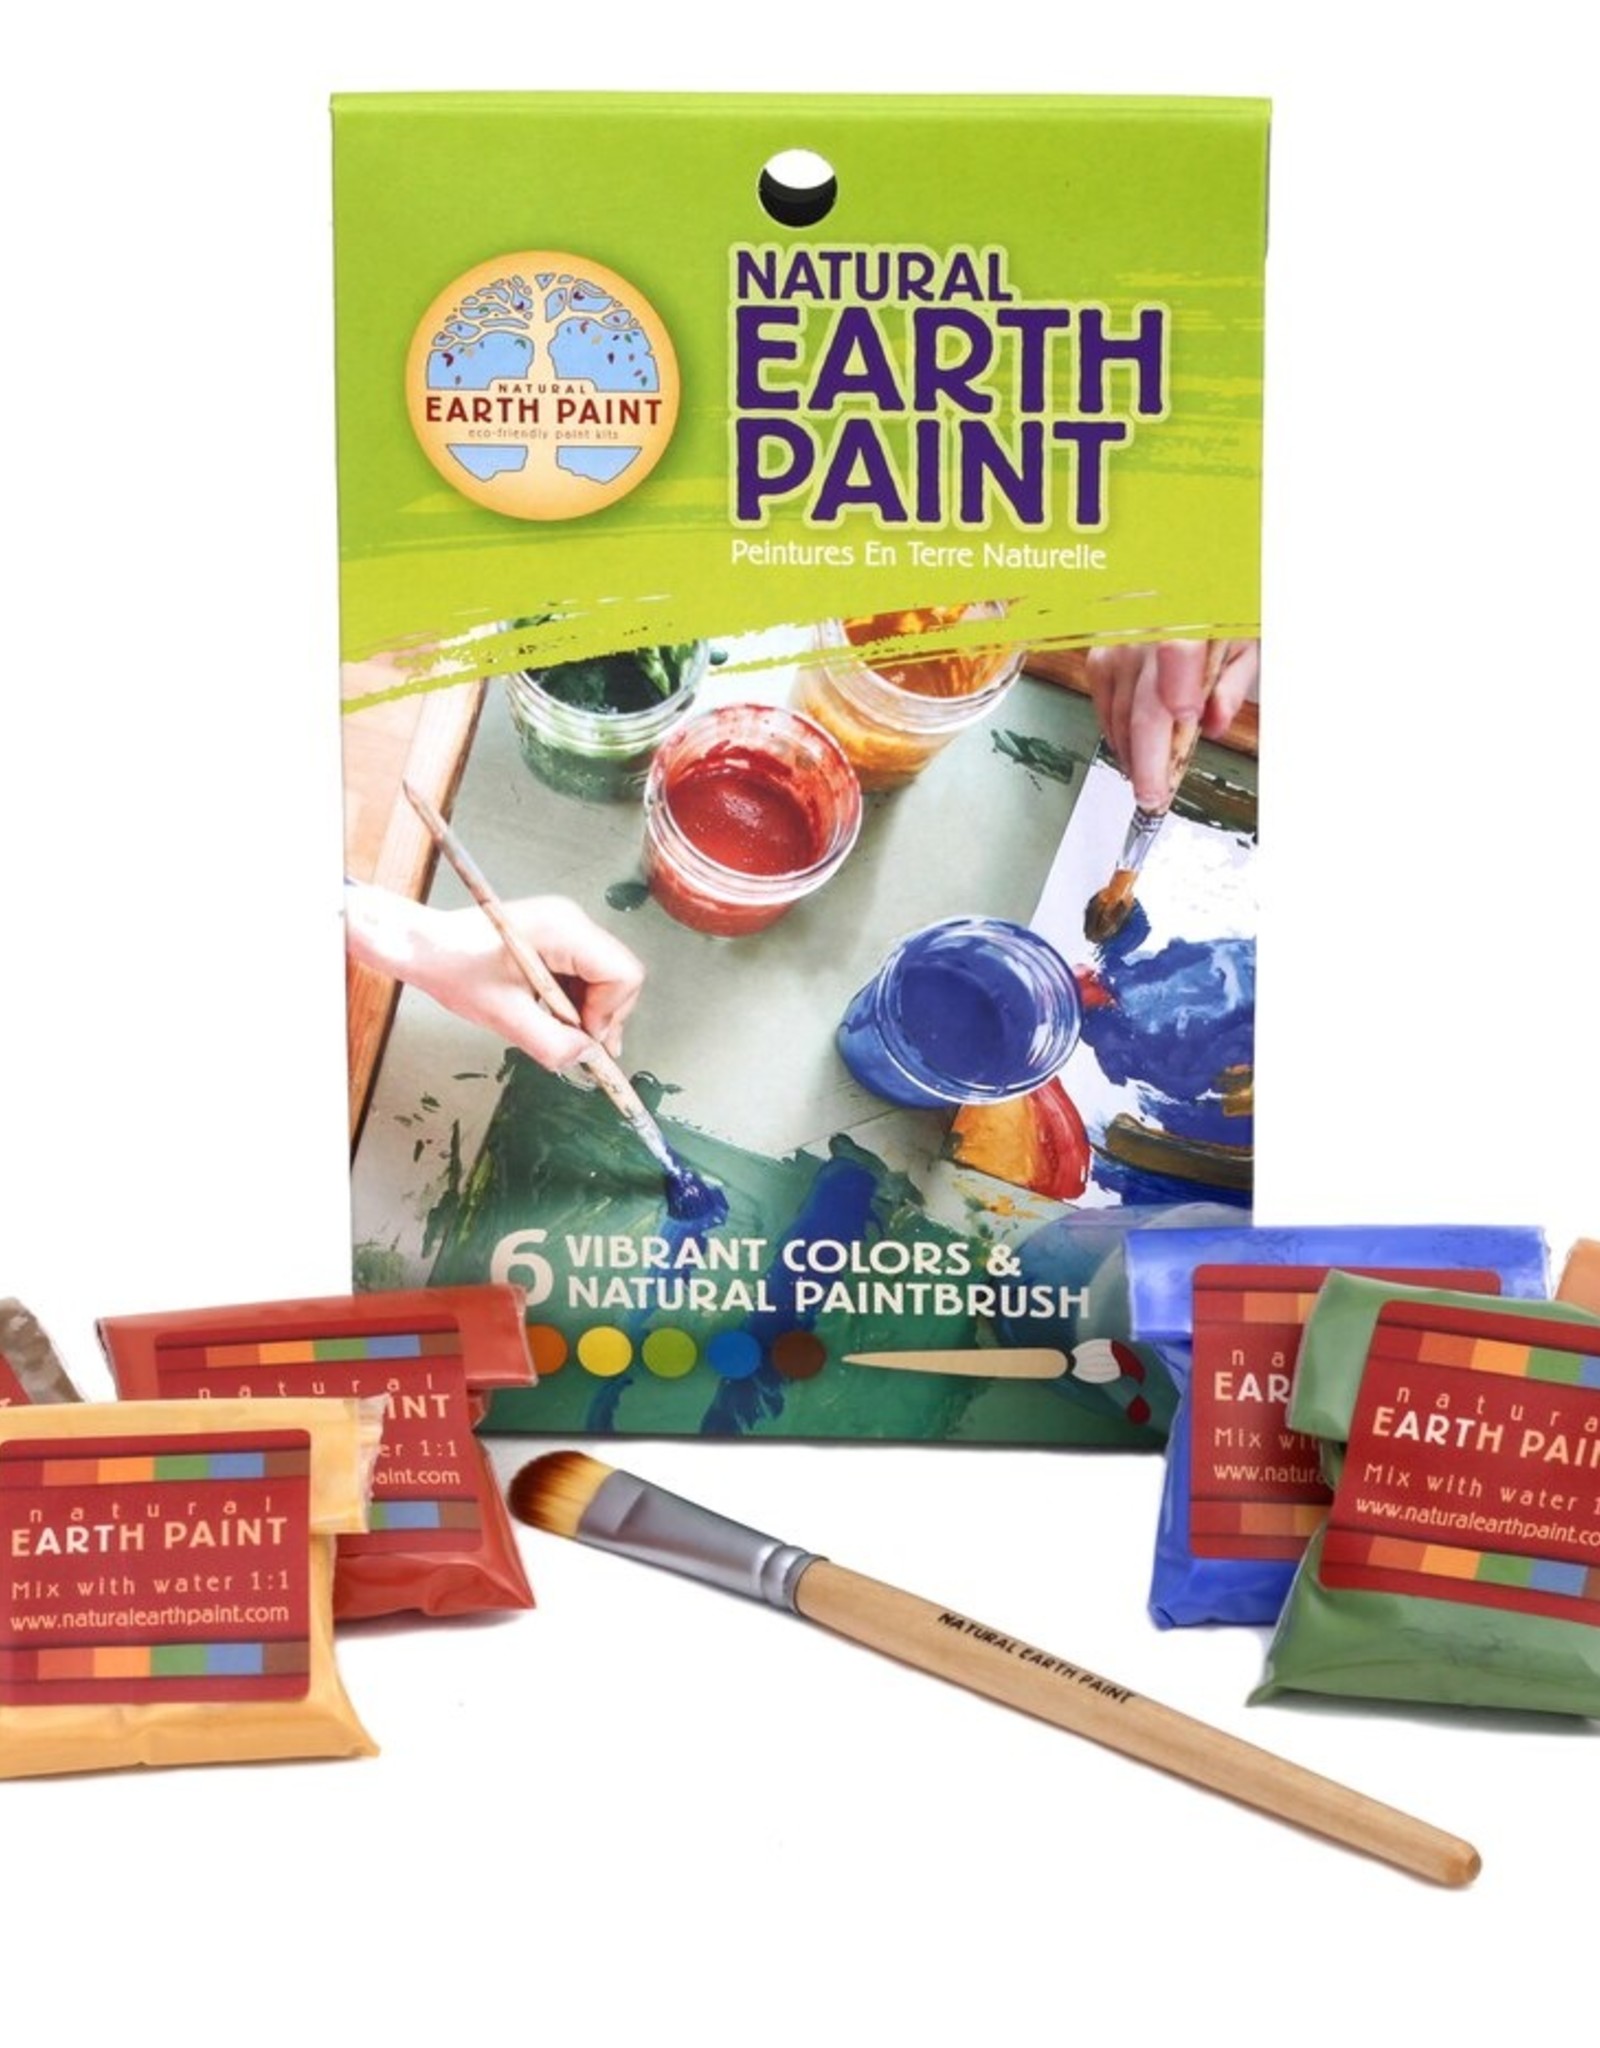 Natural Earth Paint Petite Earth Paint Kit